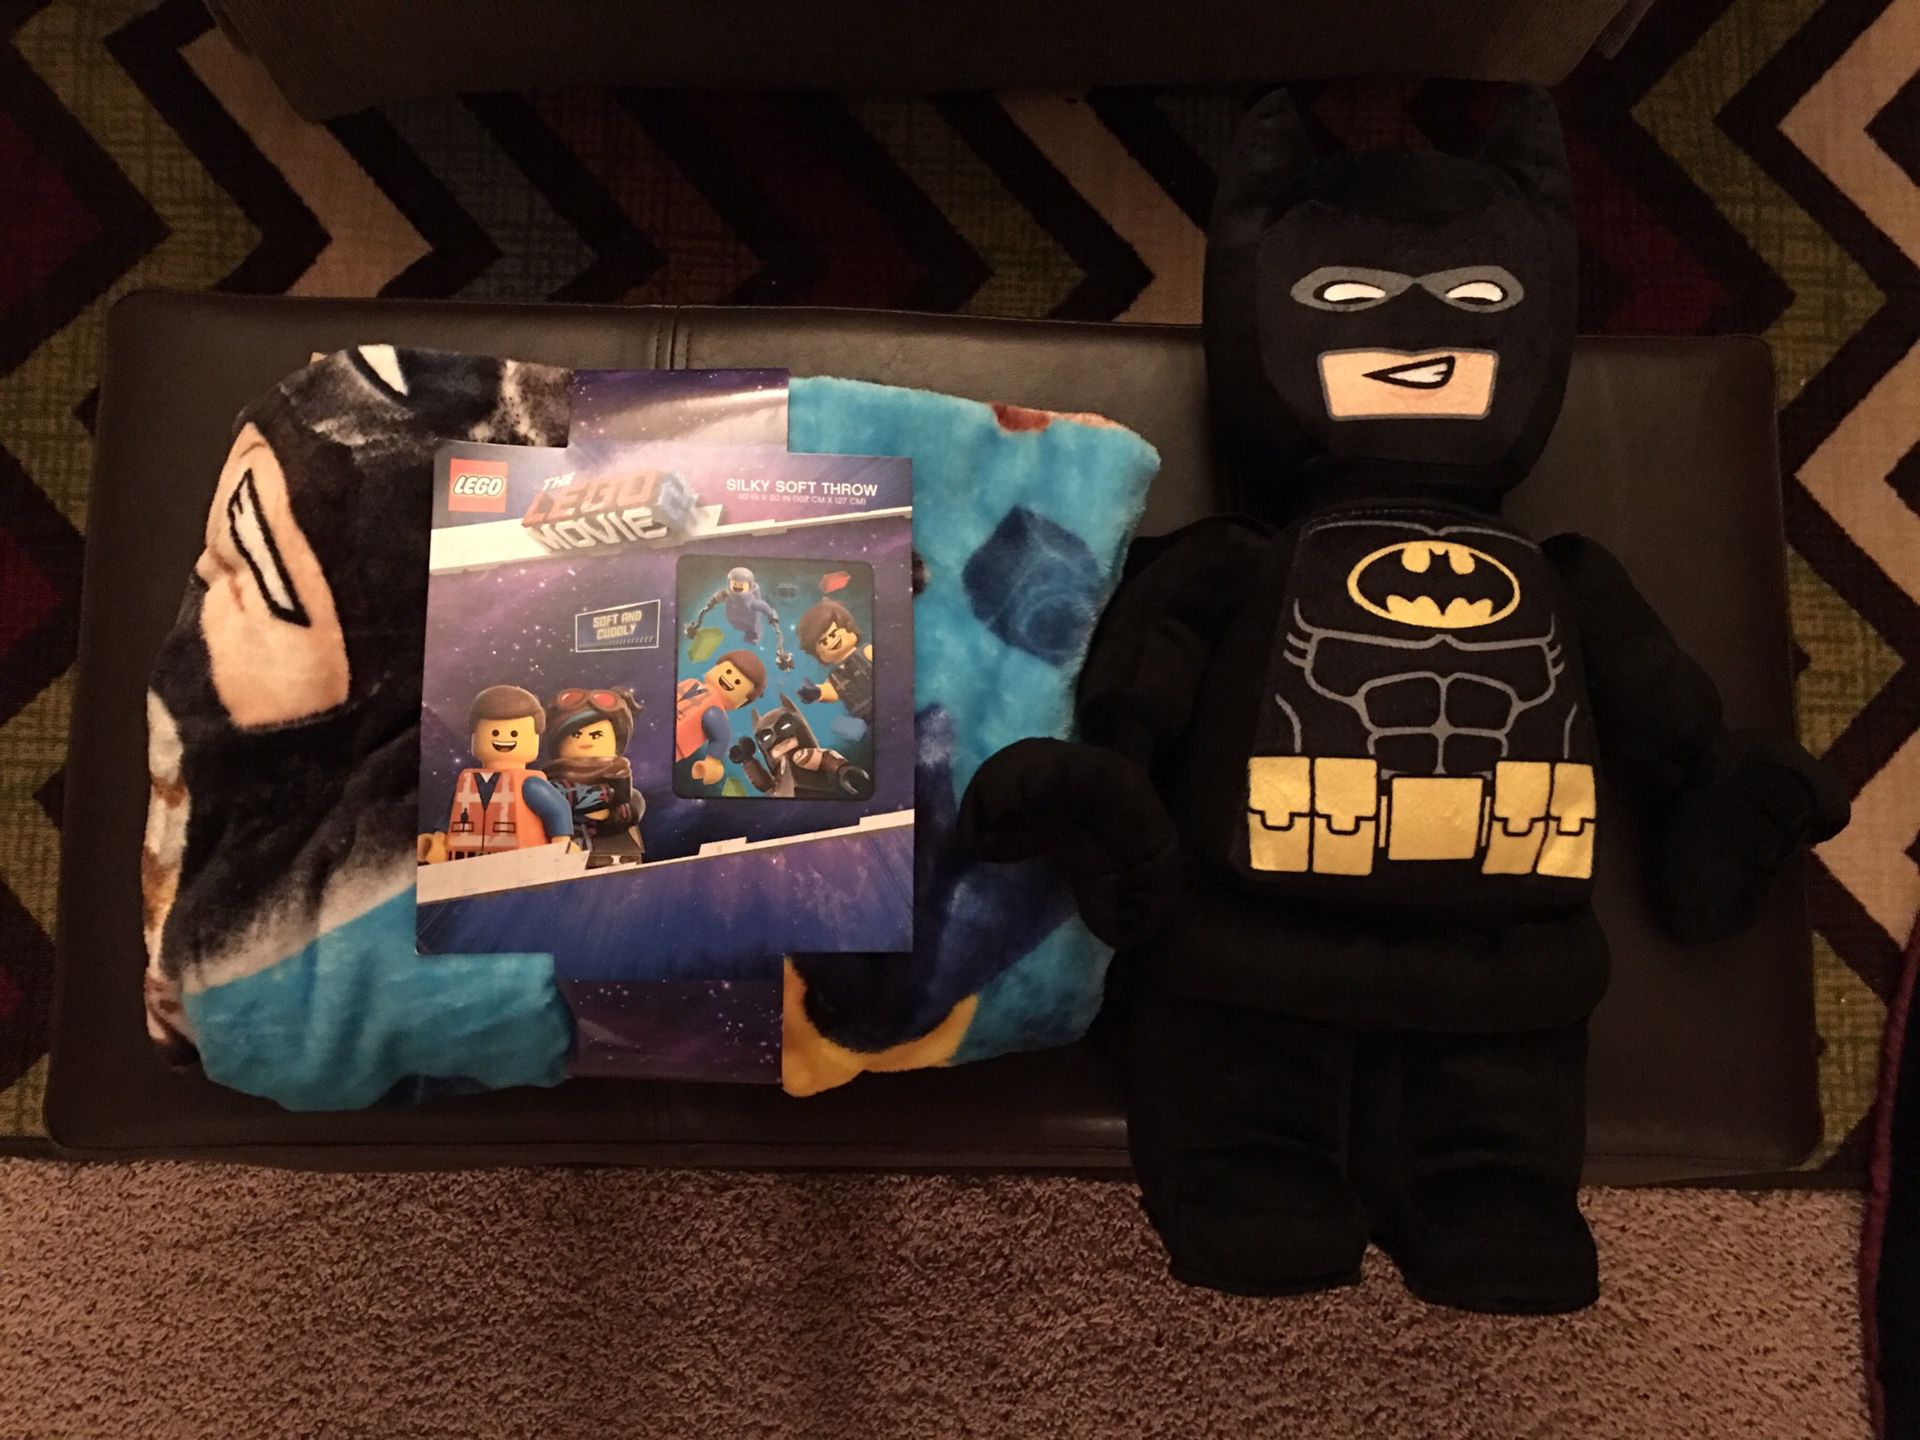 Brand new LEGO blanket and LEGO Batman plush.